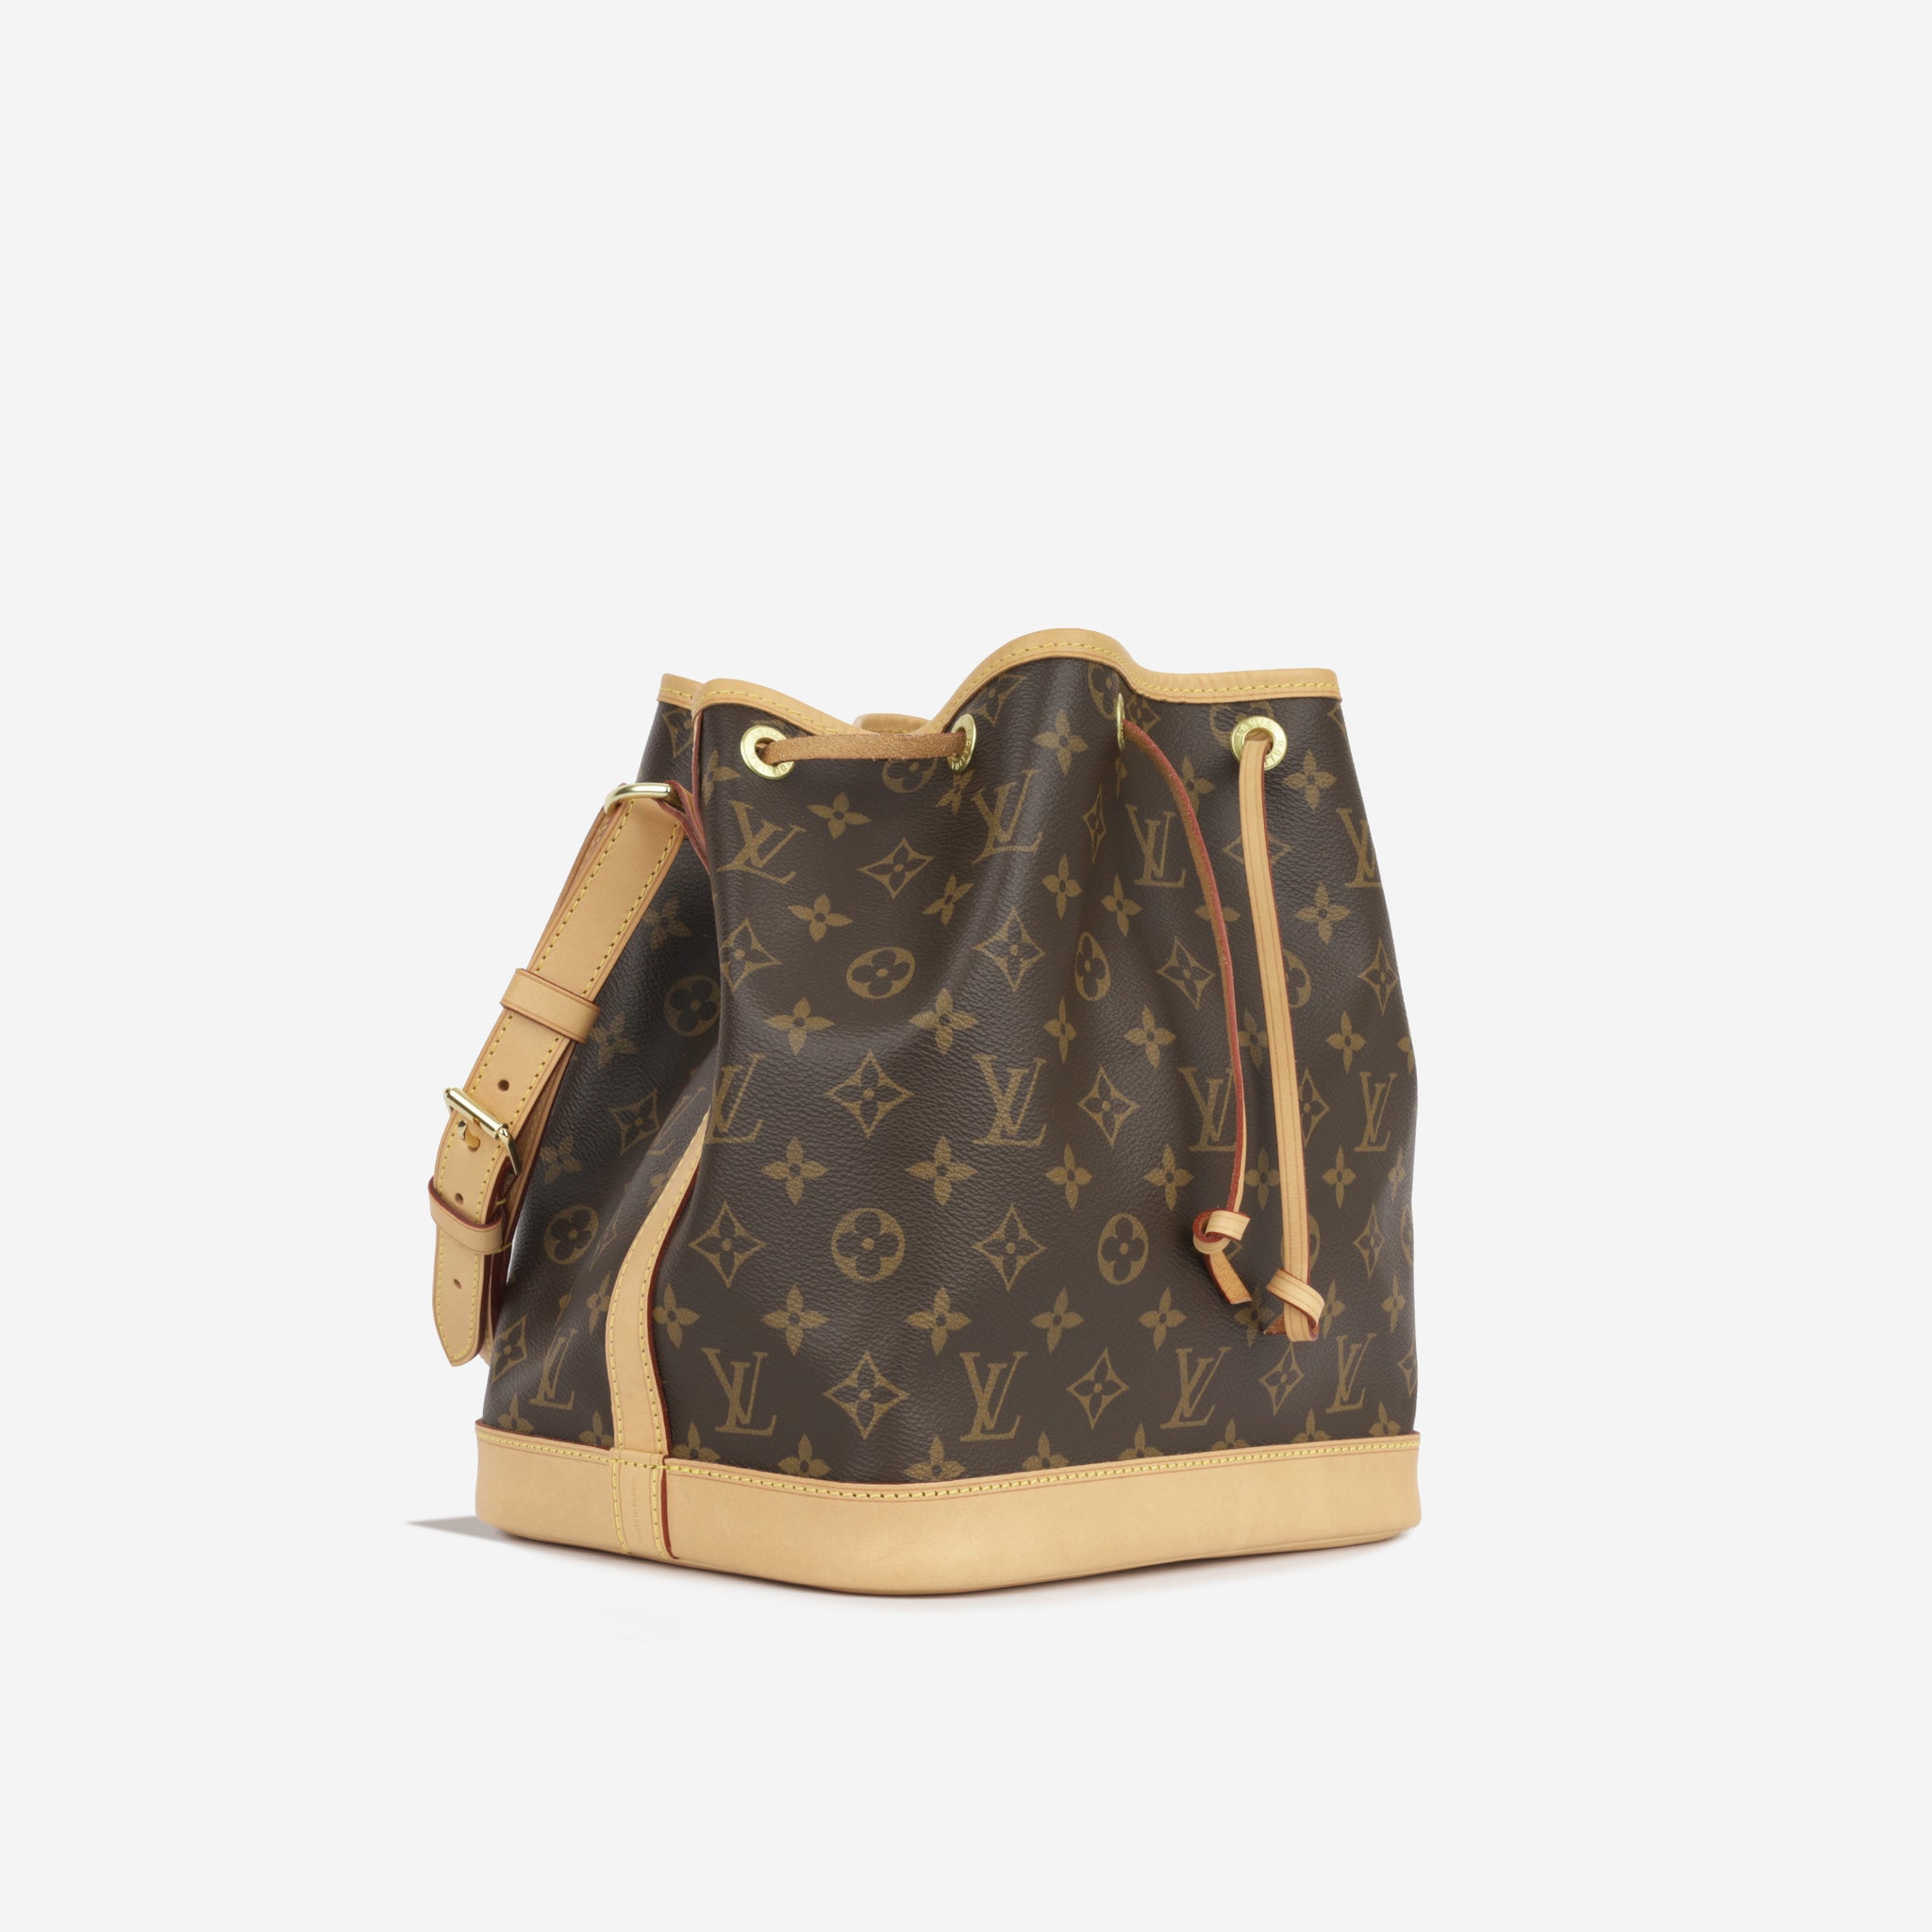 Louis Vuitton Noe BB Bags are Effortlessly Elegant